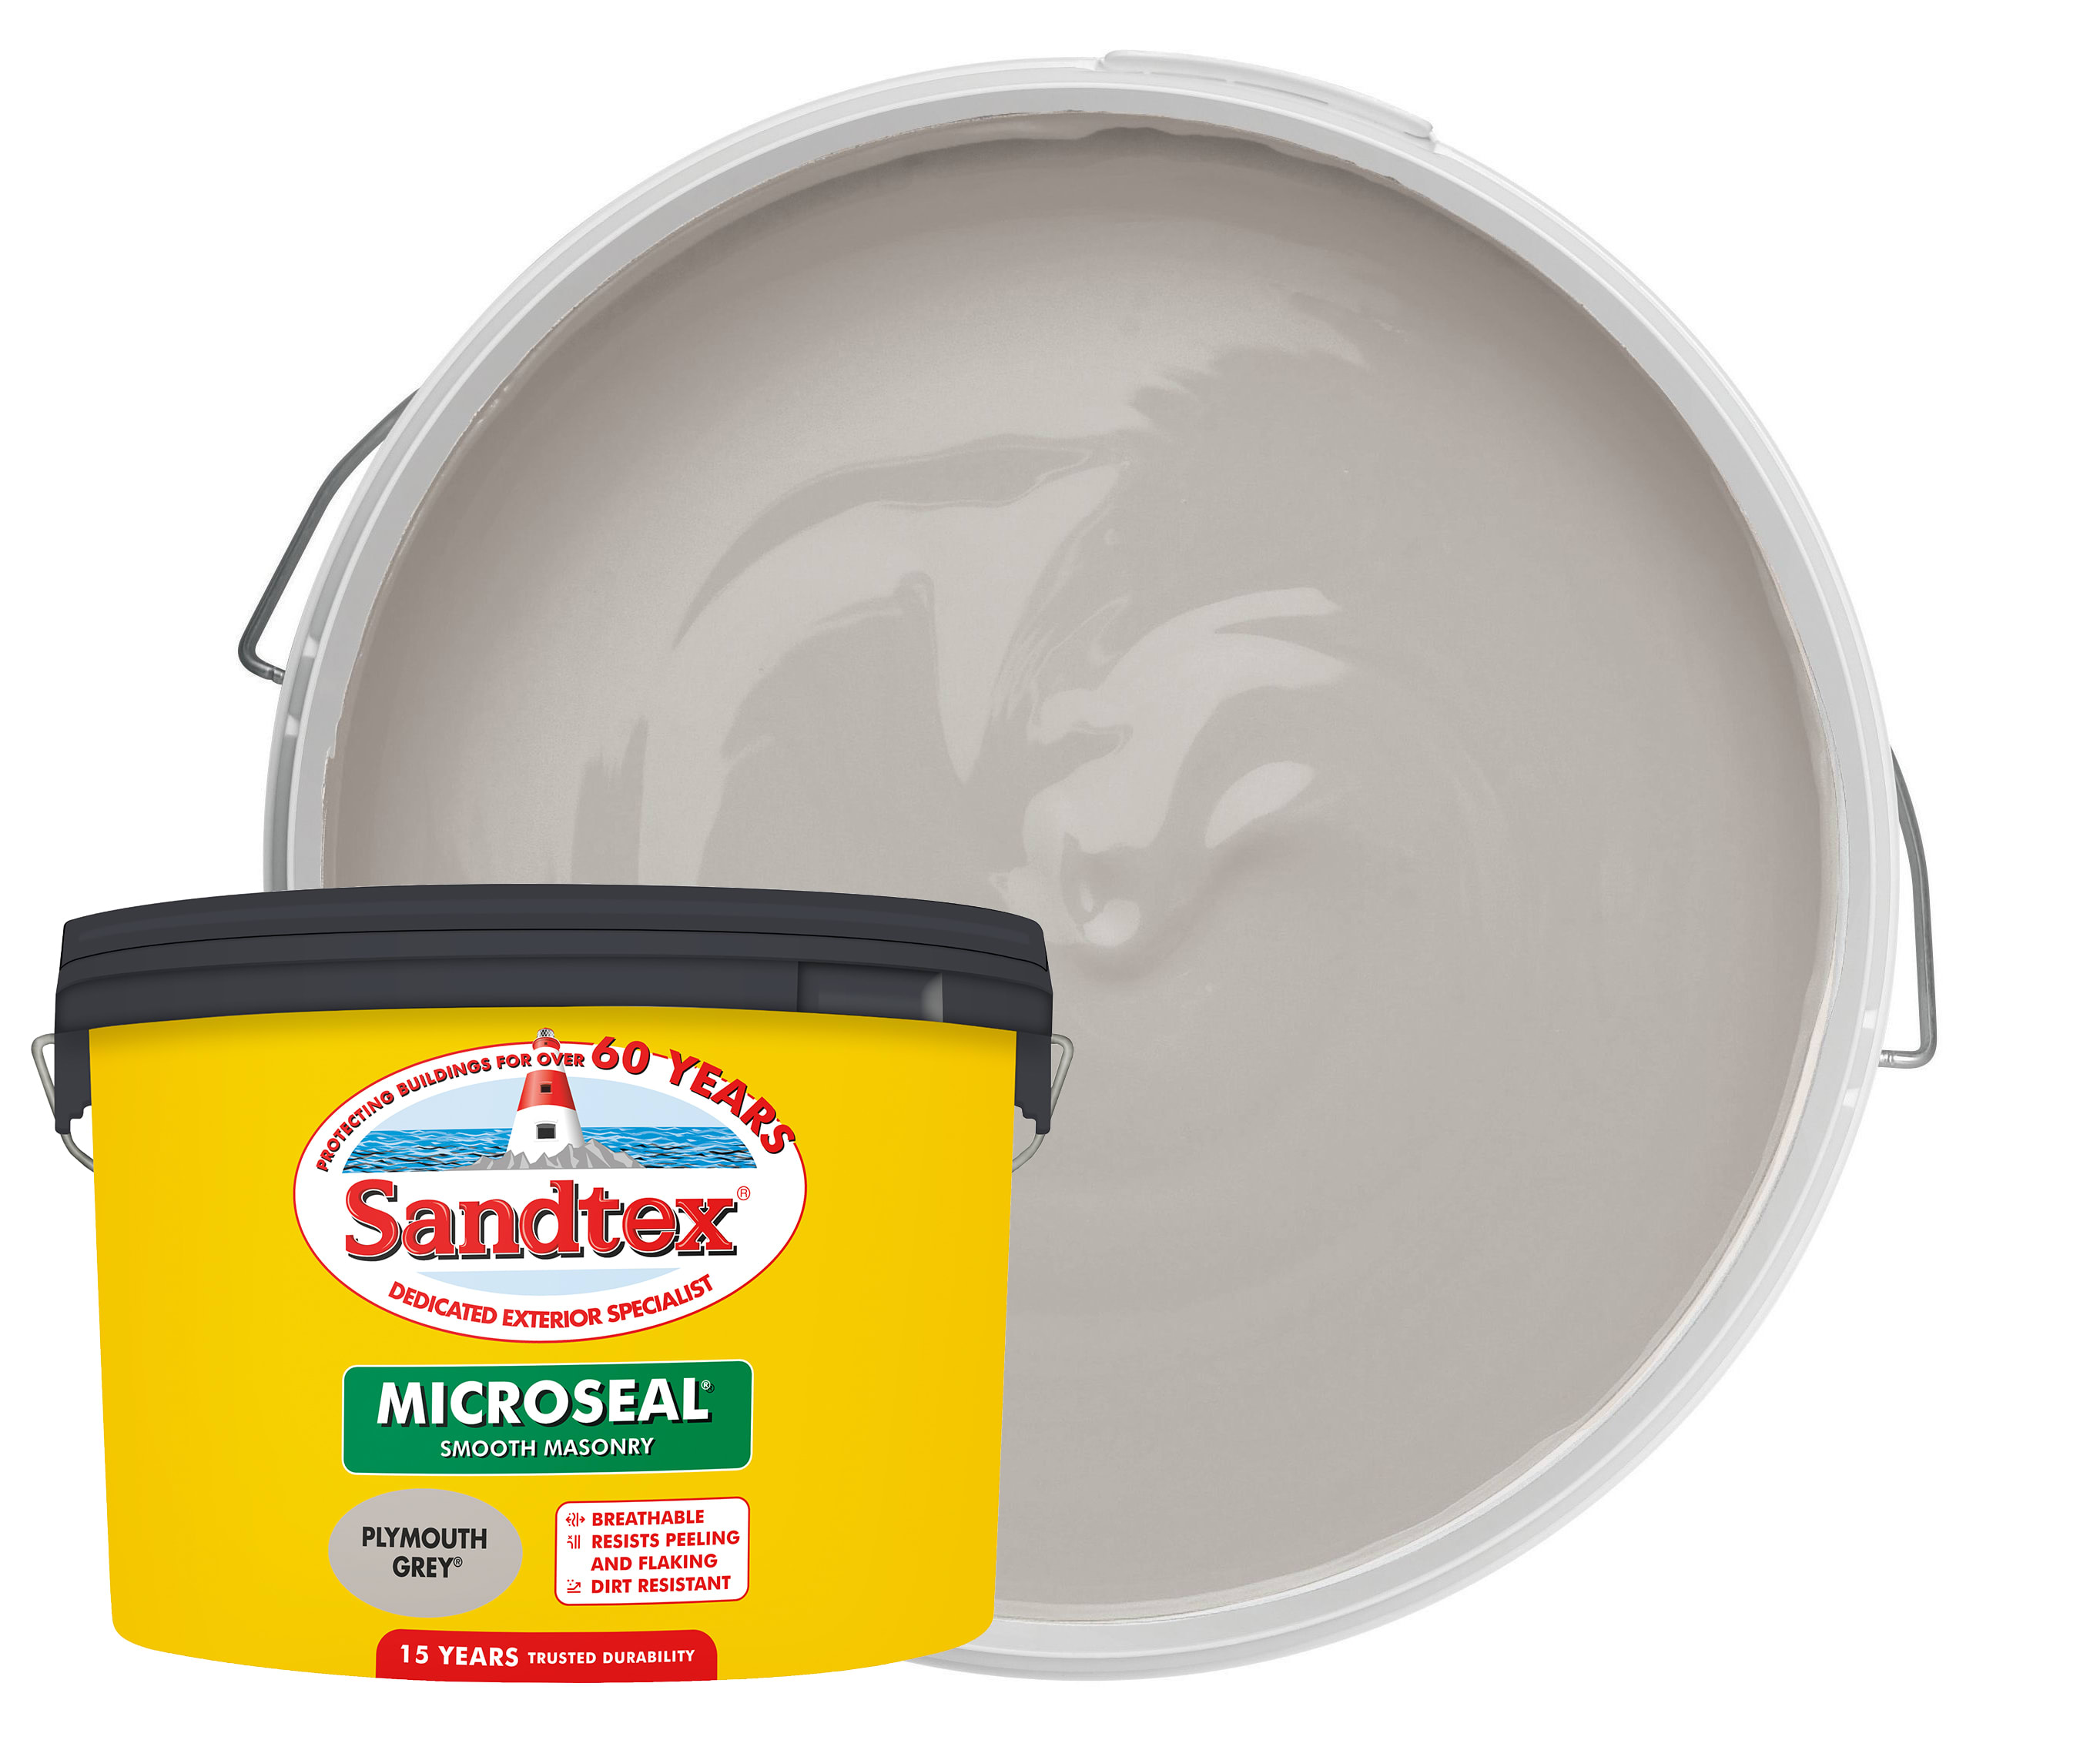 Sandtex Microseal Ultra Smooth Weatherproof Masonry 15 Year Exterior Wall Paint - Plymouth Grey - 10L